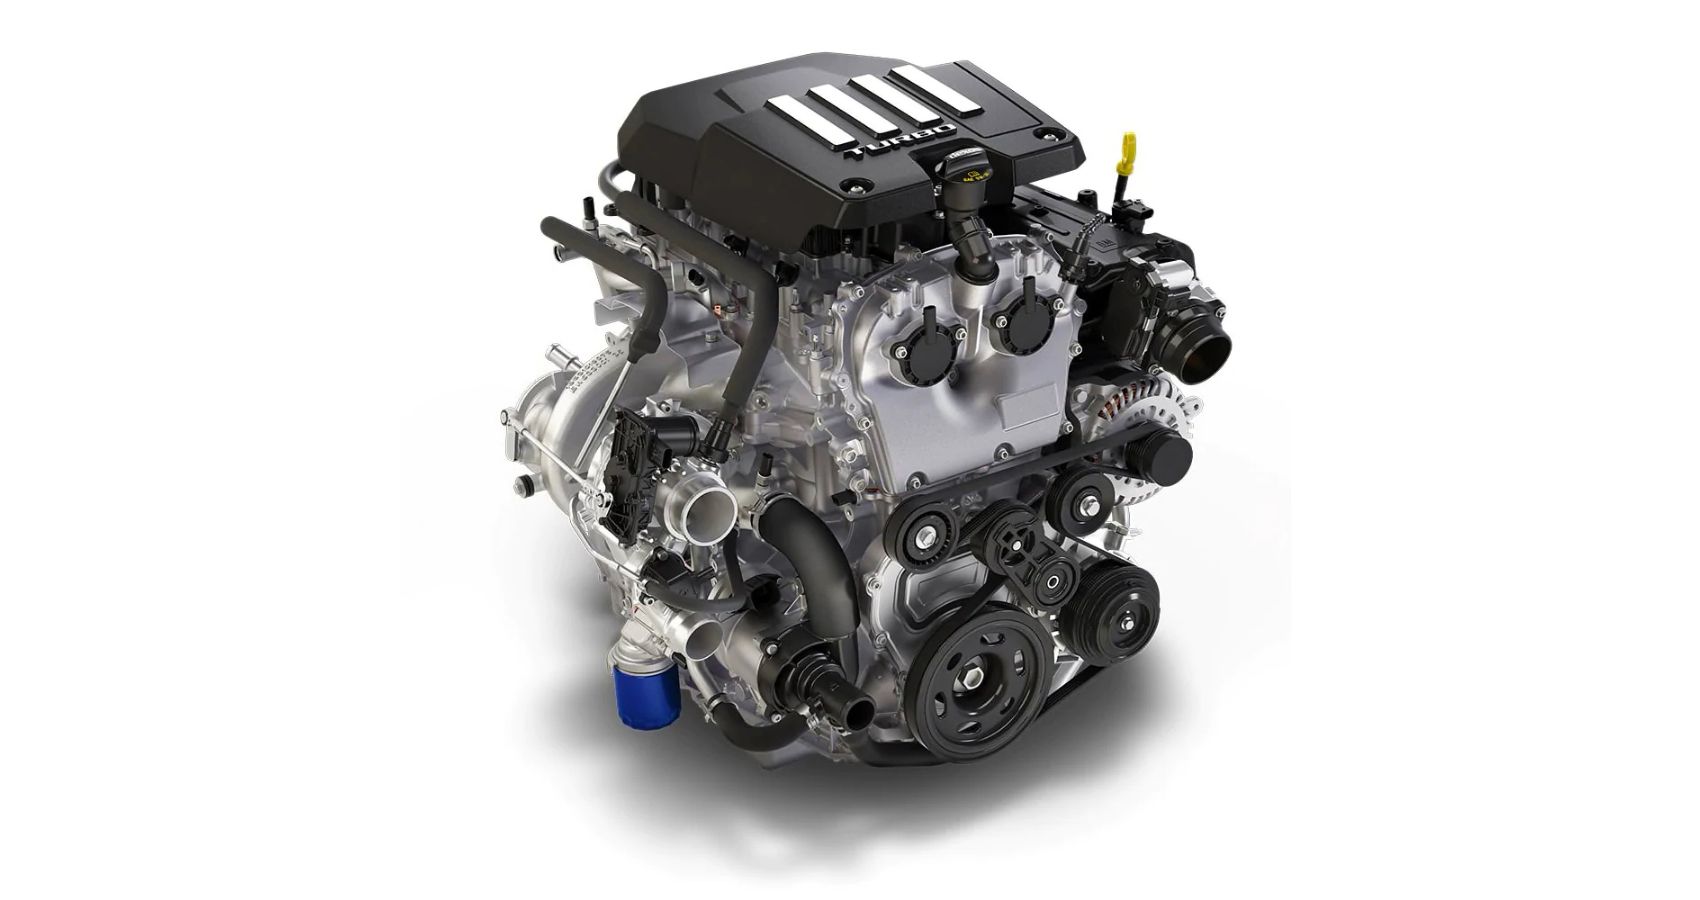 GM 2.7 liter turbocharged four cylinder engine